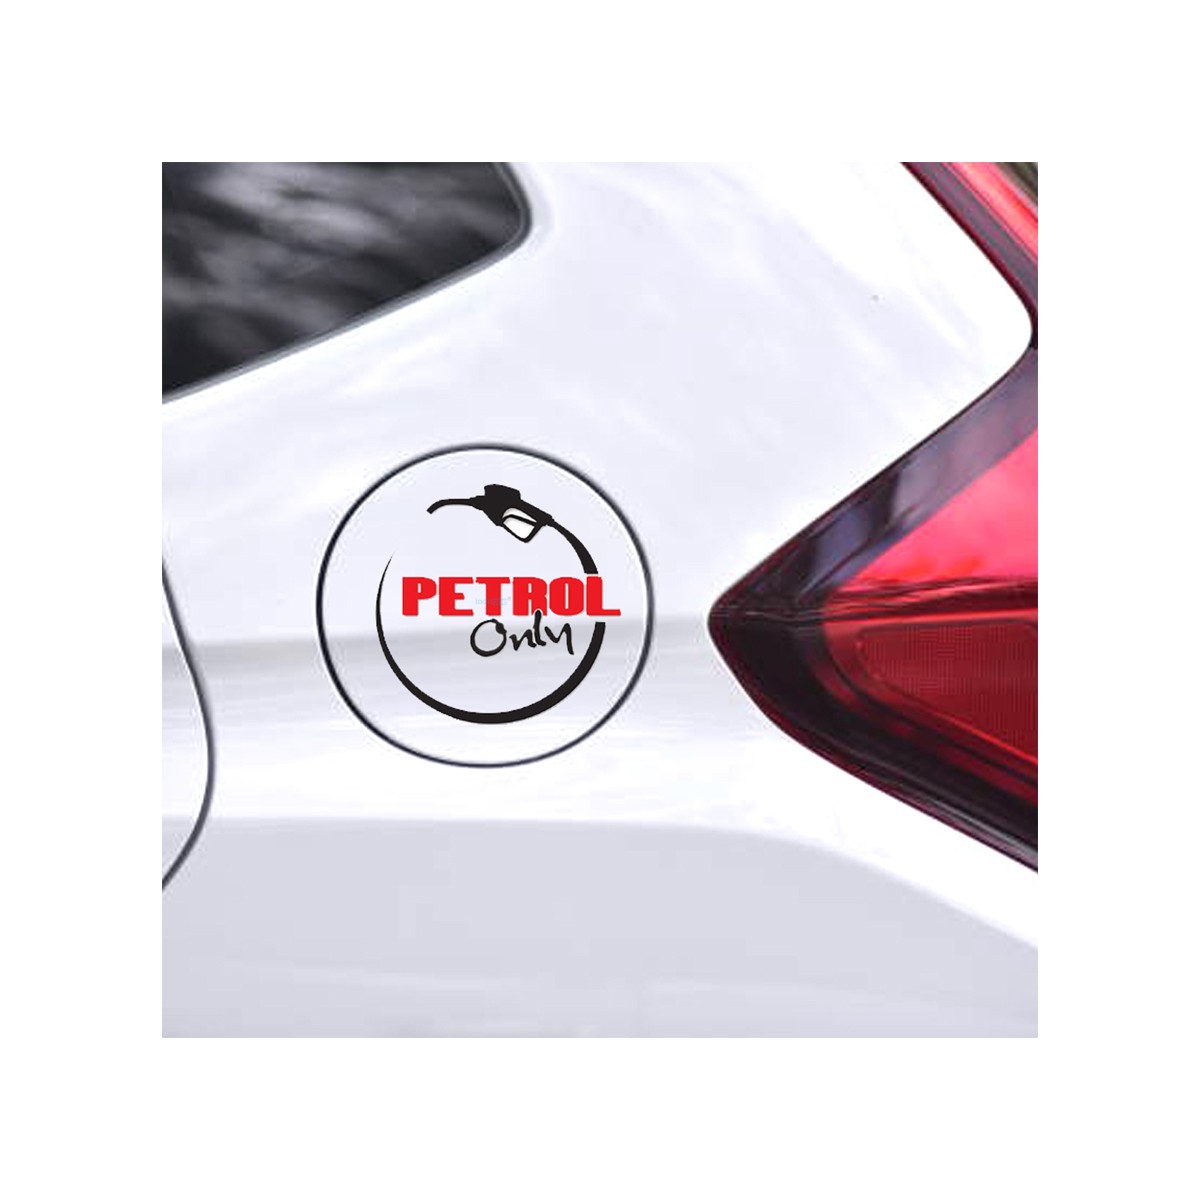 indnone® Paip Sticker Logo Sticker for Car. Car Sticker Stylish Fuel Lid |Black & Red Standard Size